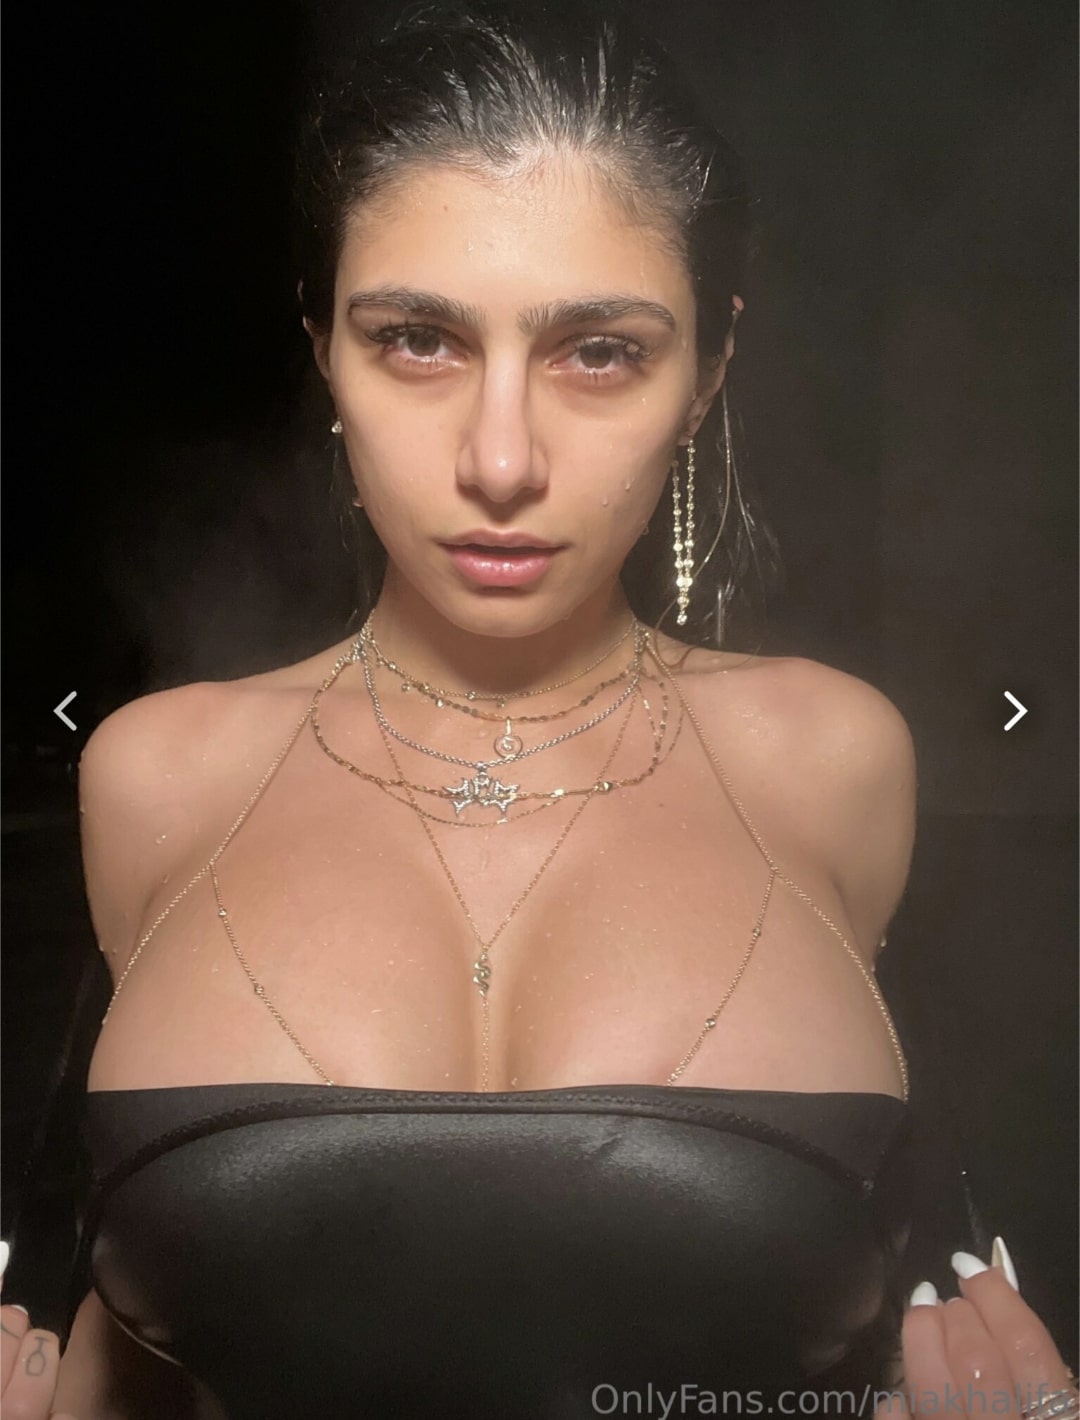 mia khalifa shower full topless tits onlyfans livestream video 9cf8549